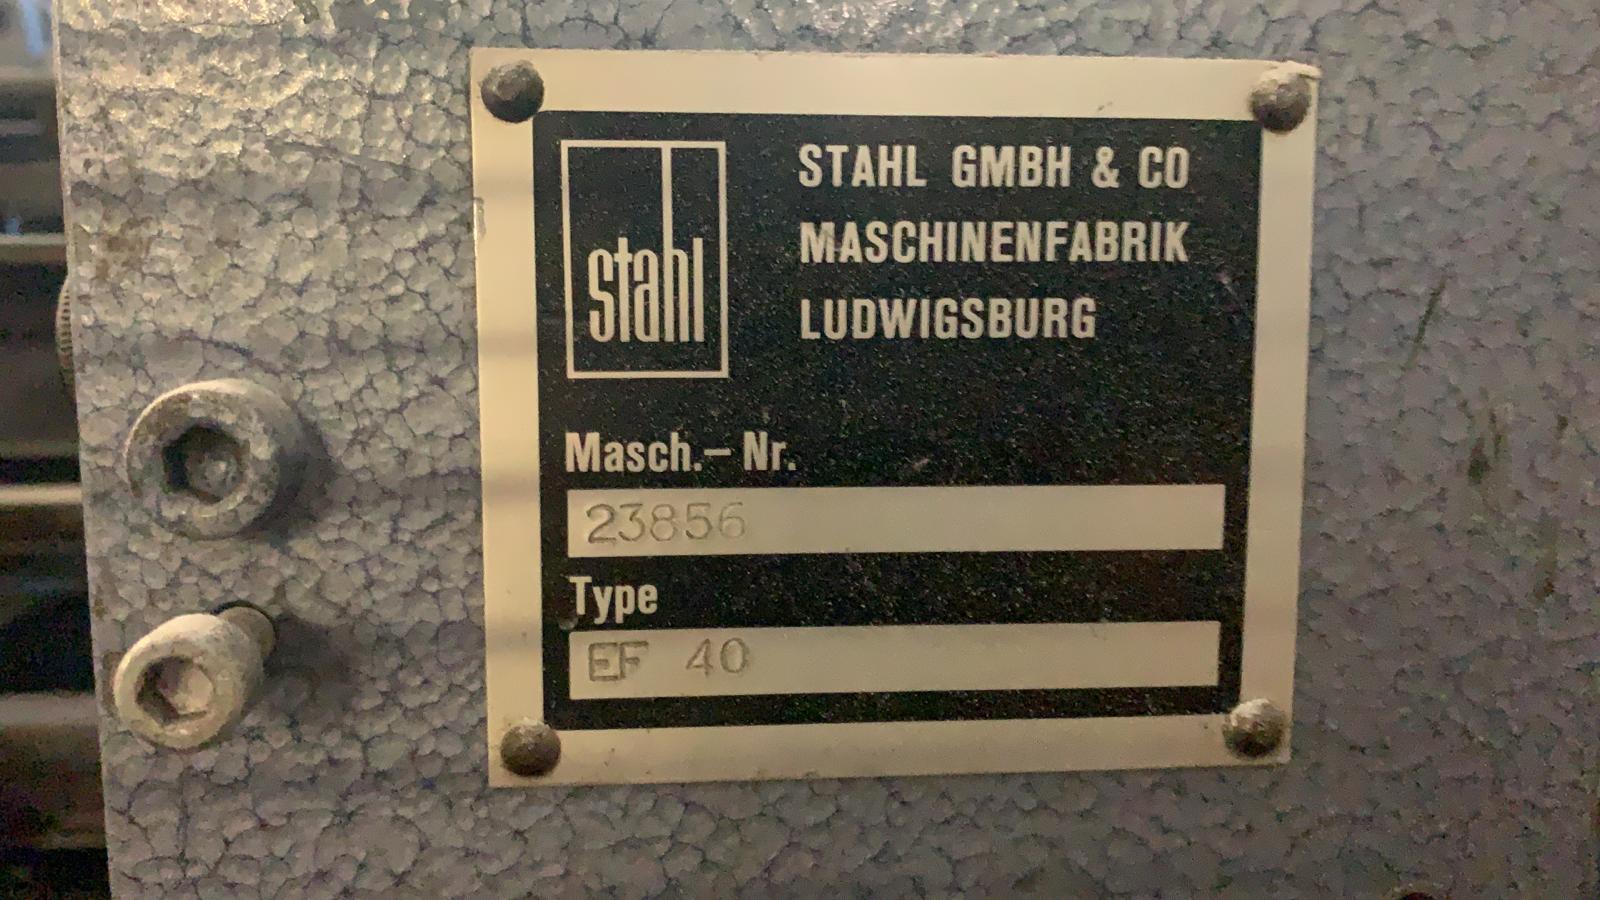 Stahl TFU78 Year 1990 Size 